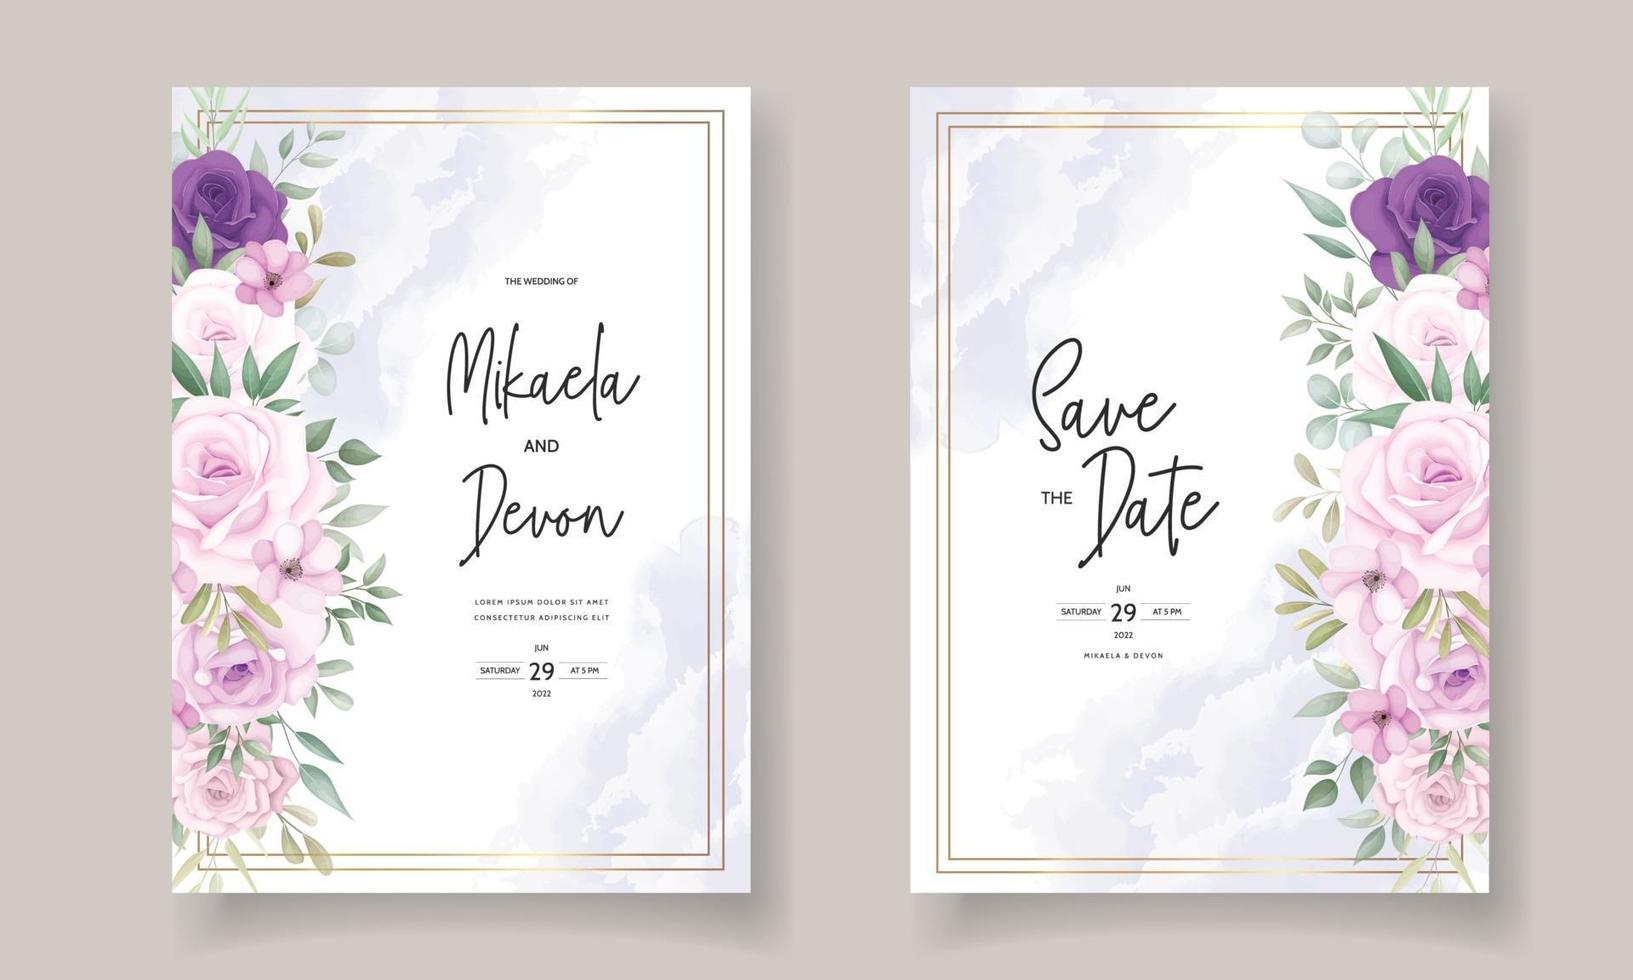 Beautiful wedding invitation designs with beautiful flower ornaments vector